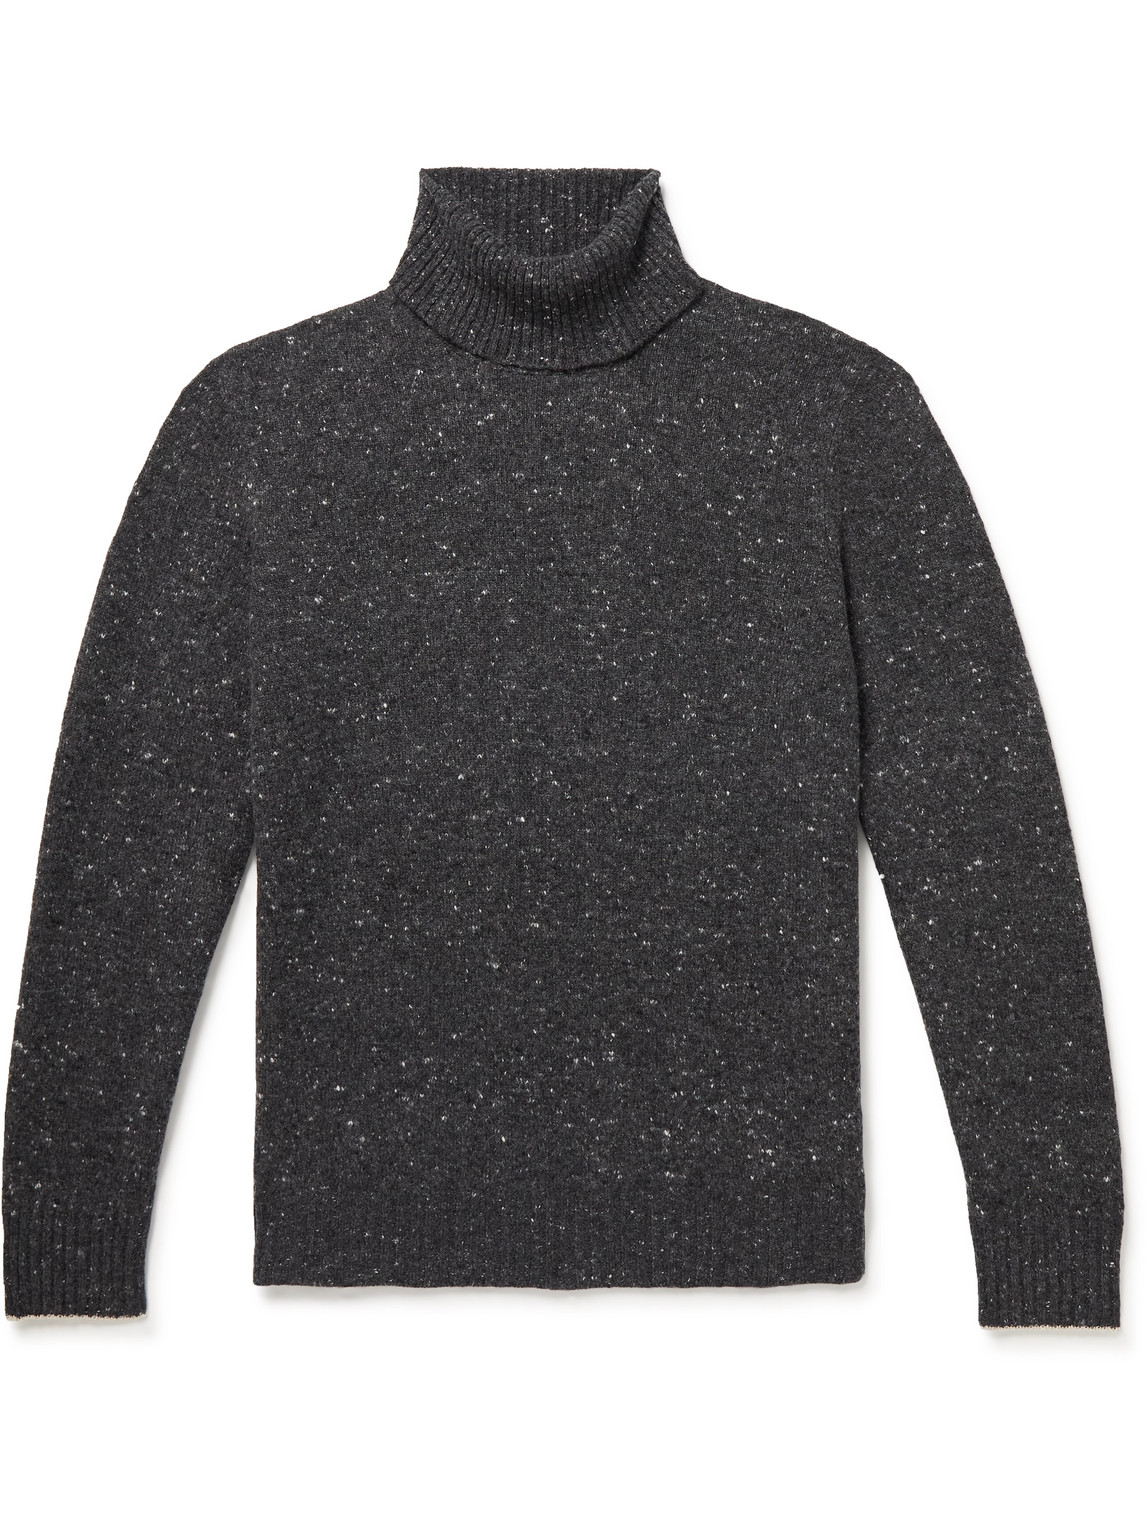 Mélange Virgin Wool and Cashmere-Blend Rollneck Sweater